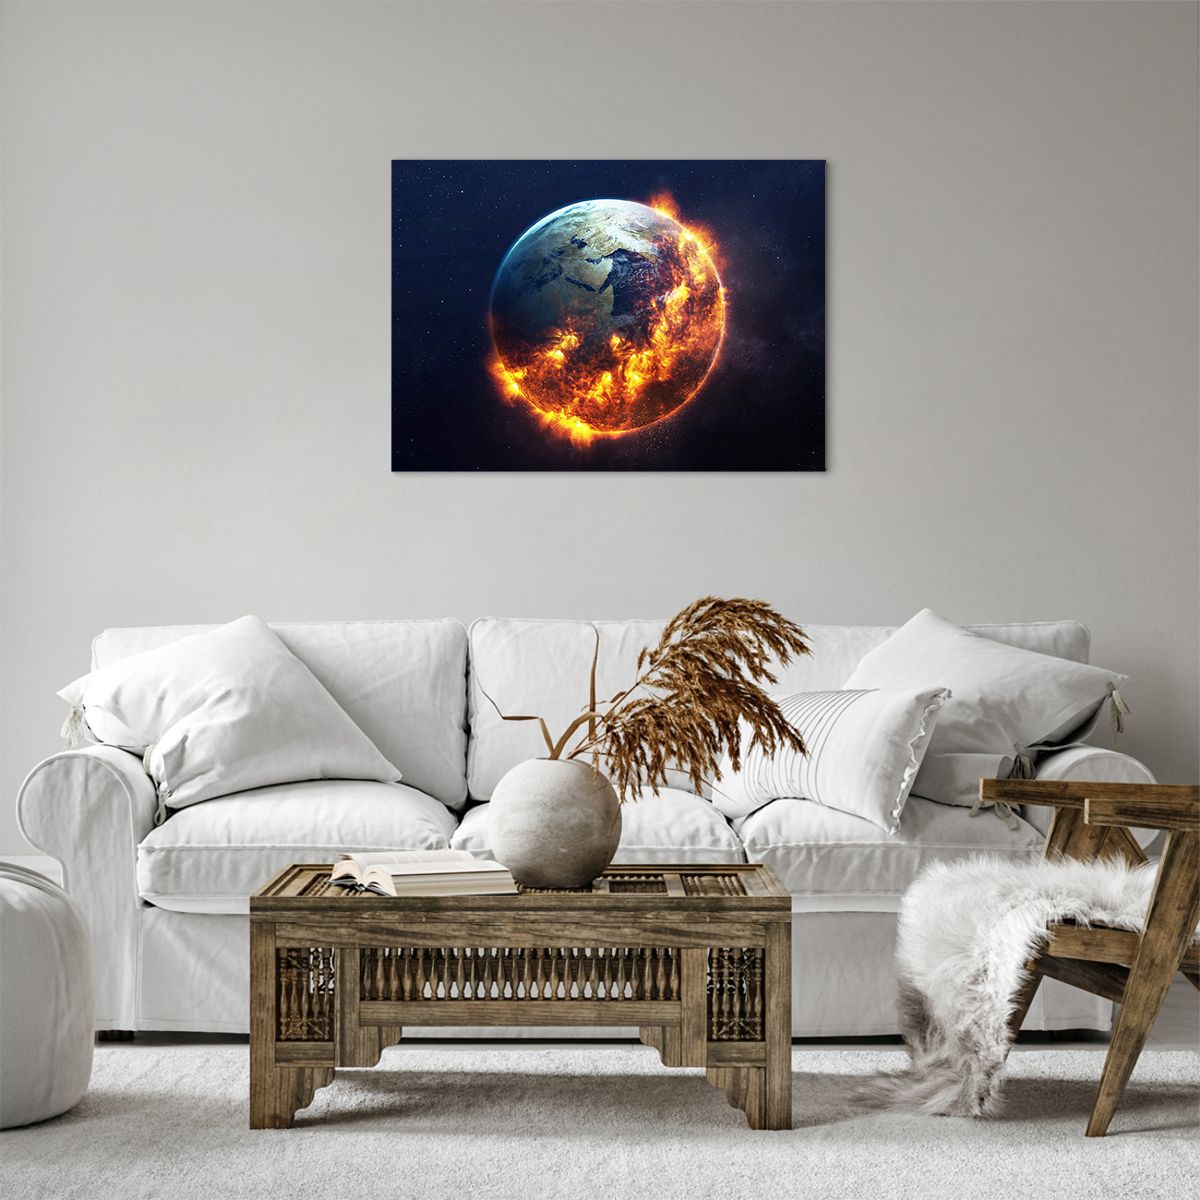 Impression sur toile Cosmos, Impression sur toile Planète Terre, Impression sur toile Flammes De Feu, Impression sur toile Globe, Impression sur toile Apocalypse